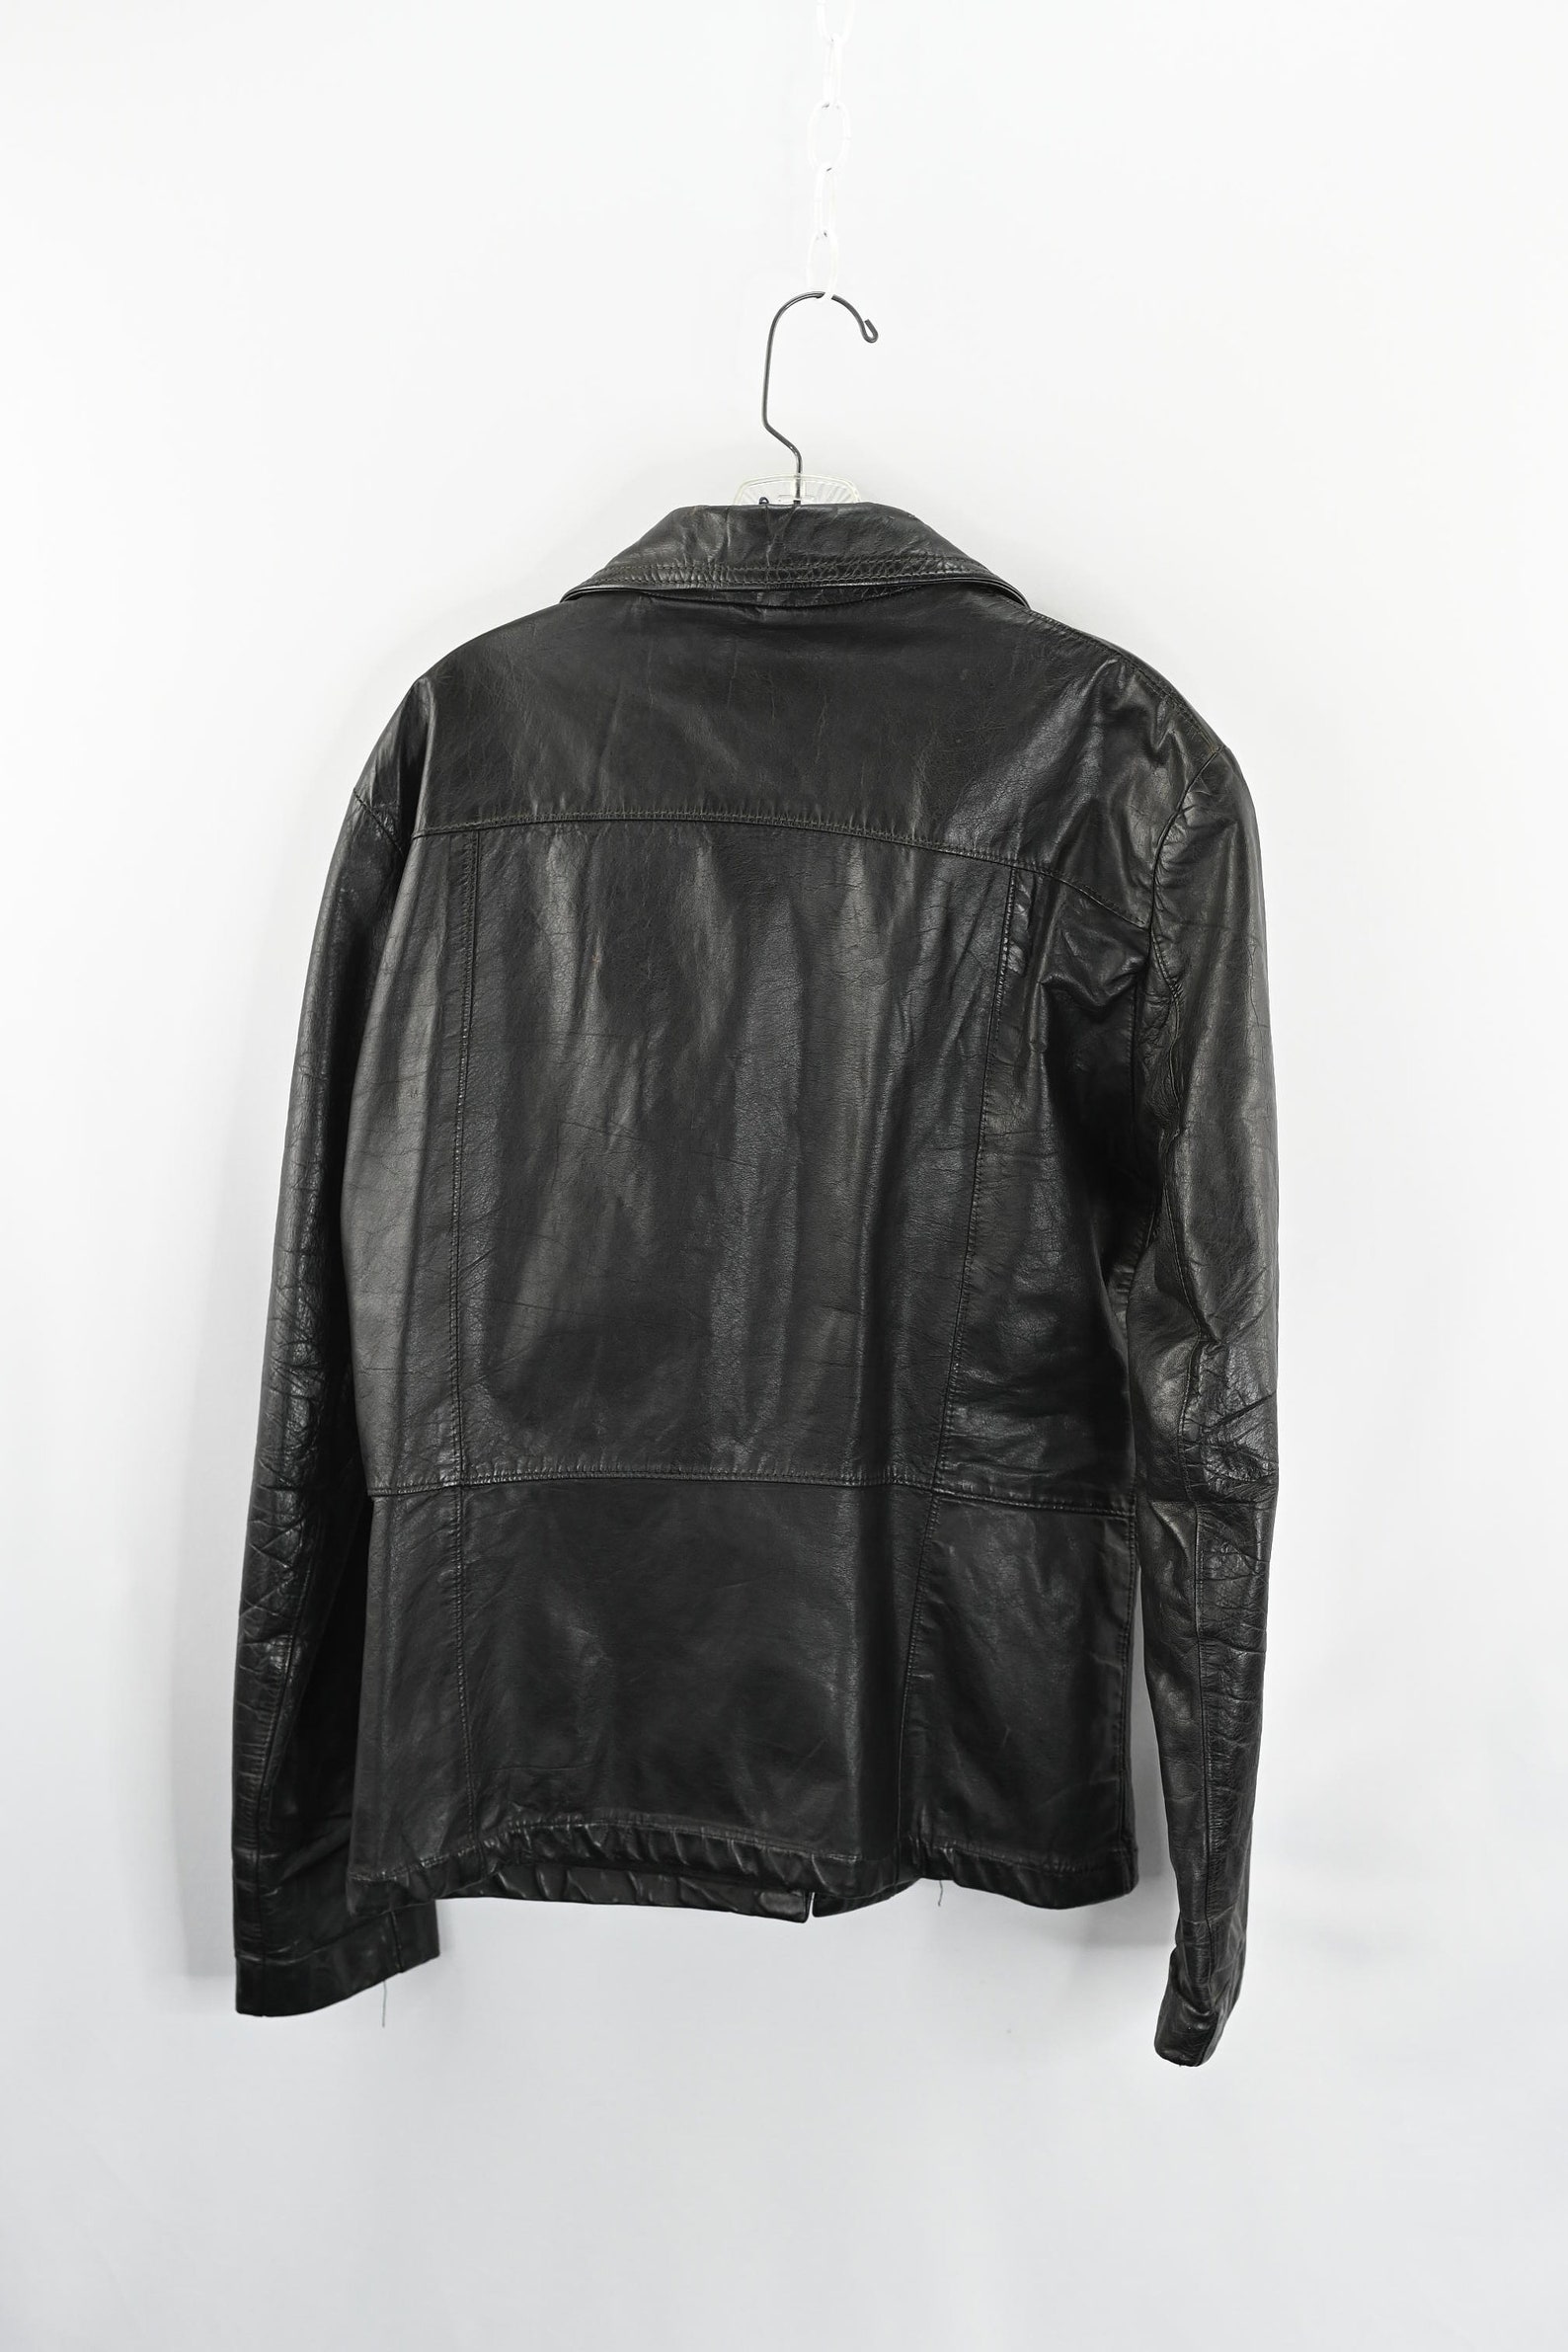 Vintage Black Leather Jacket Size Fits Like L | Etsy